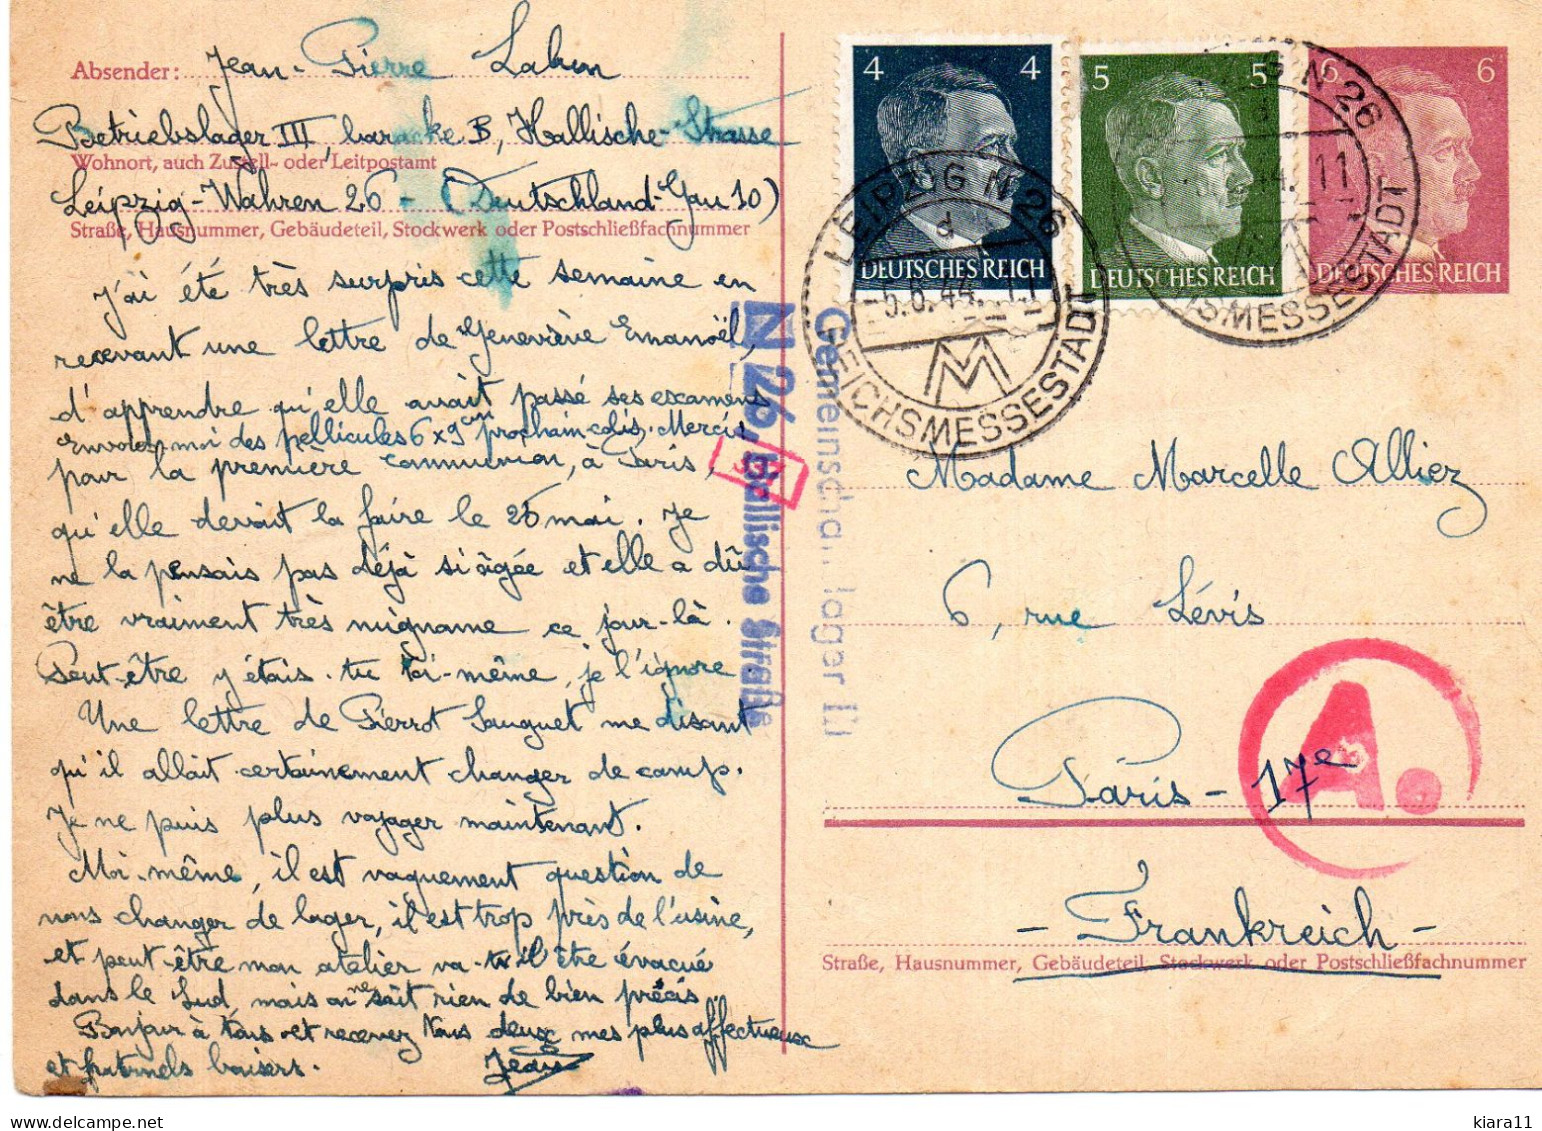 LEIPZIG - ENTIER POSTAL AVEC CENSURE - Correspondance D'un Prisonnier - Betriebslager III - BARACKENLEGER - 05.06.1944 - Postcards - Used